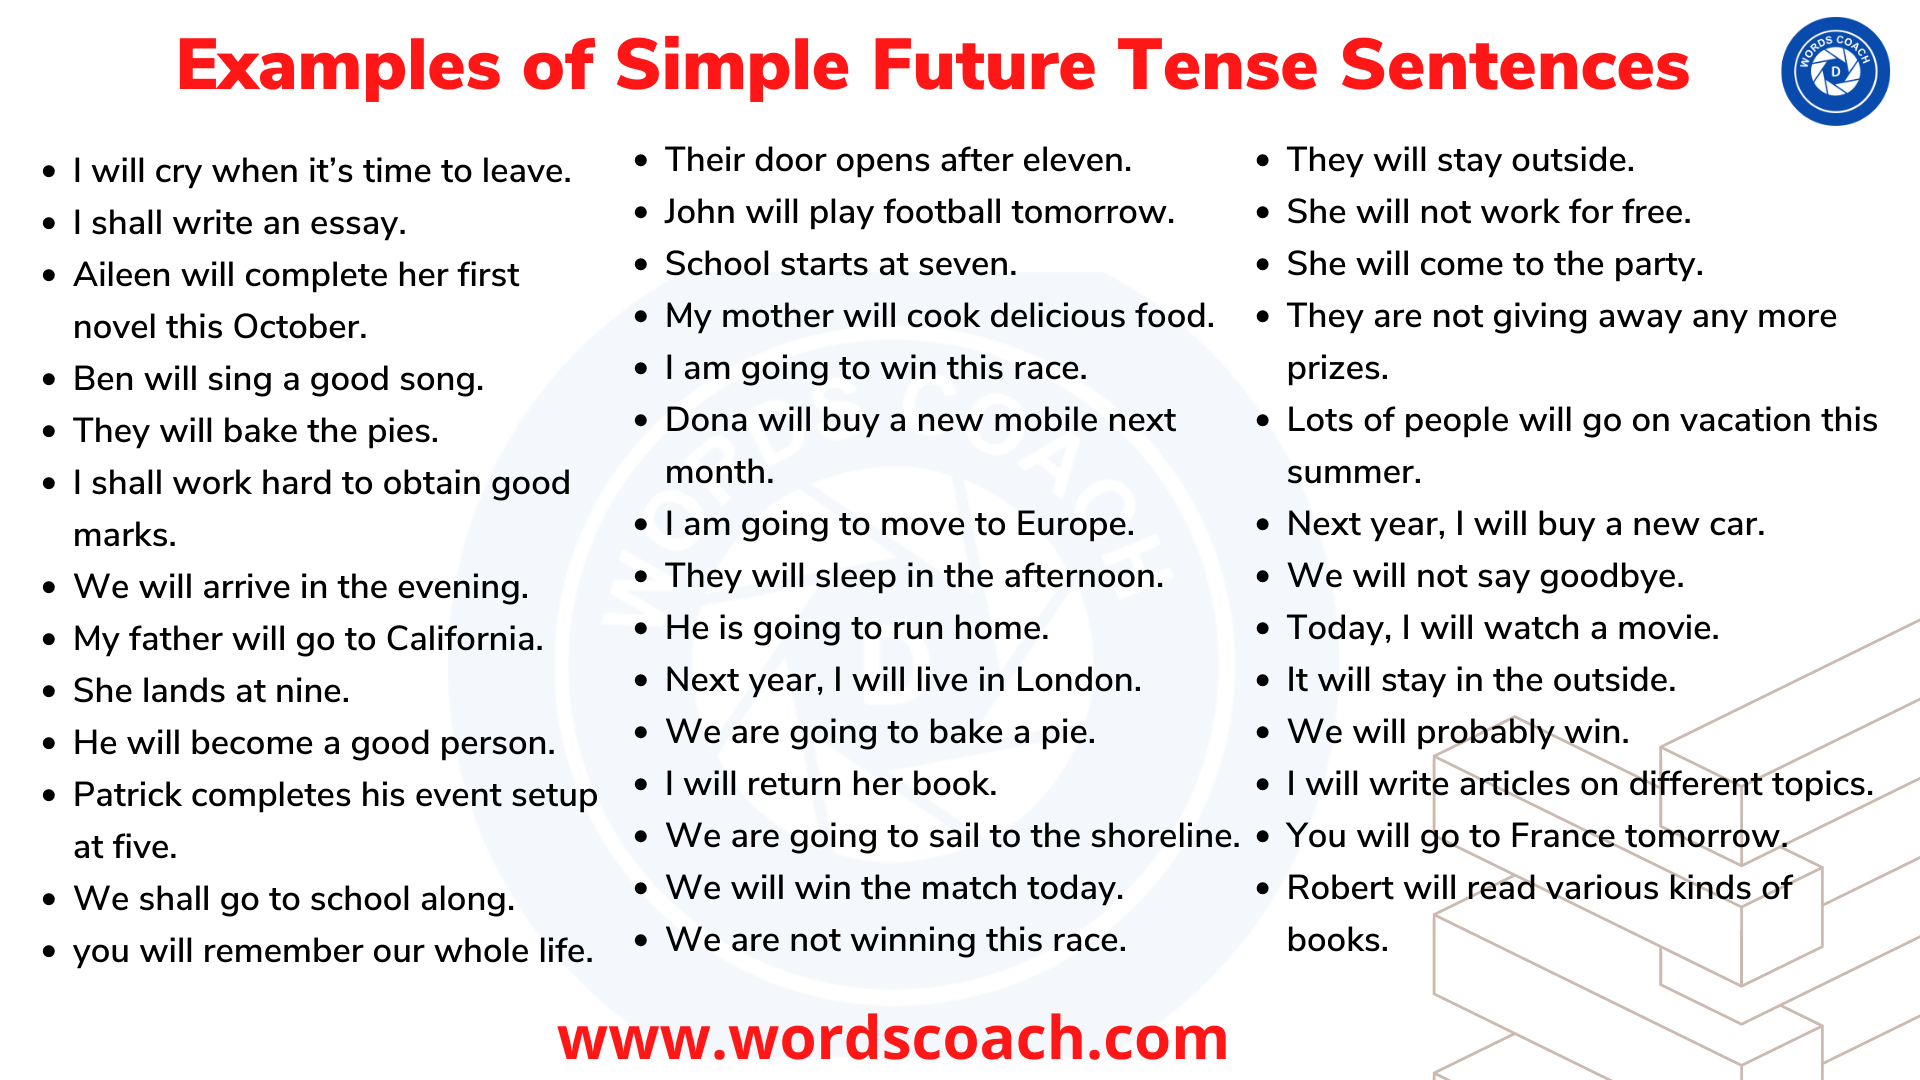 Examples of Simple Future Tense Sentences